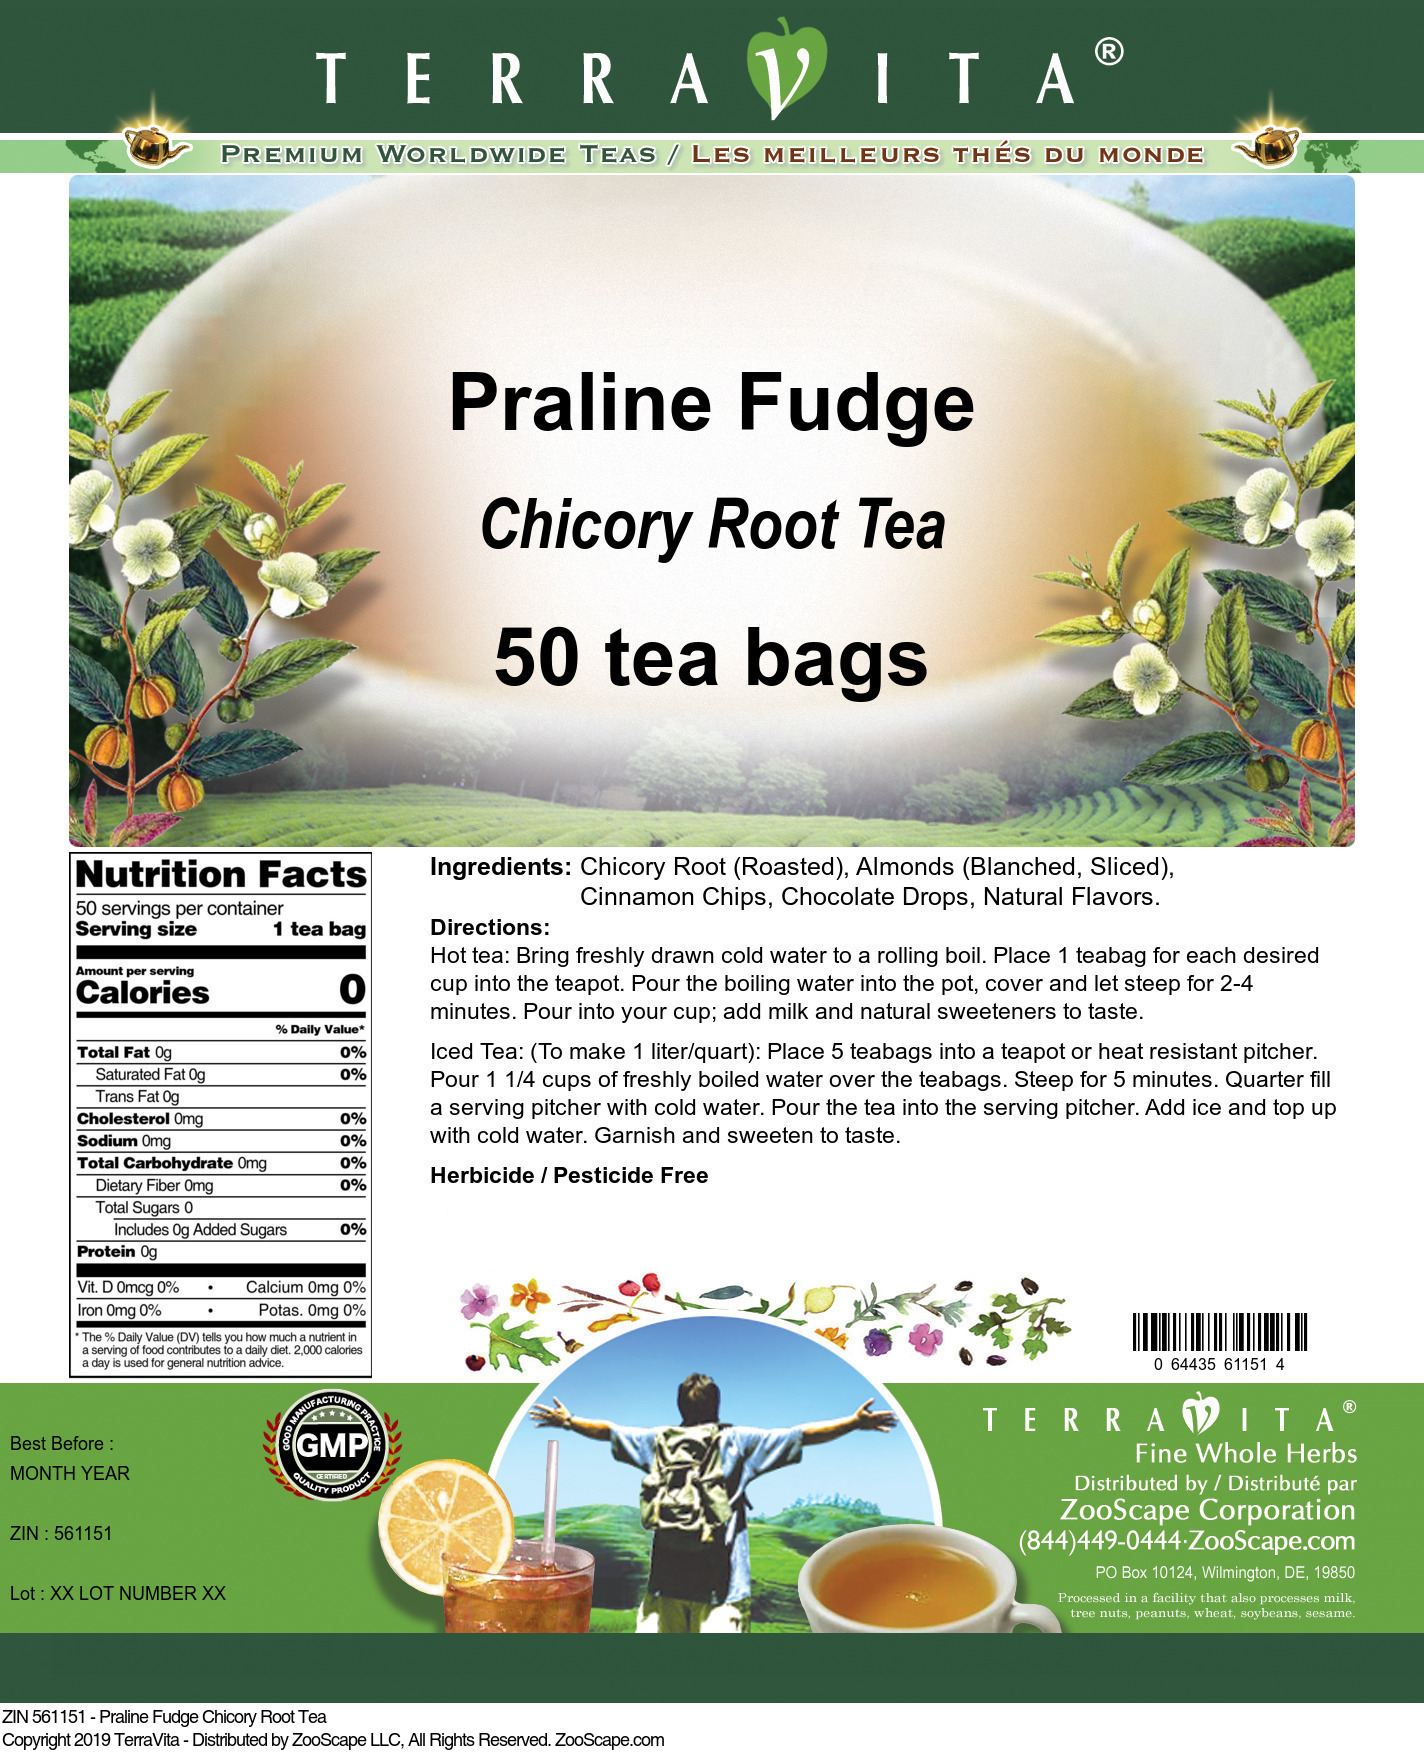 Praline Fudge Chicory Root Tea - Label